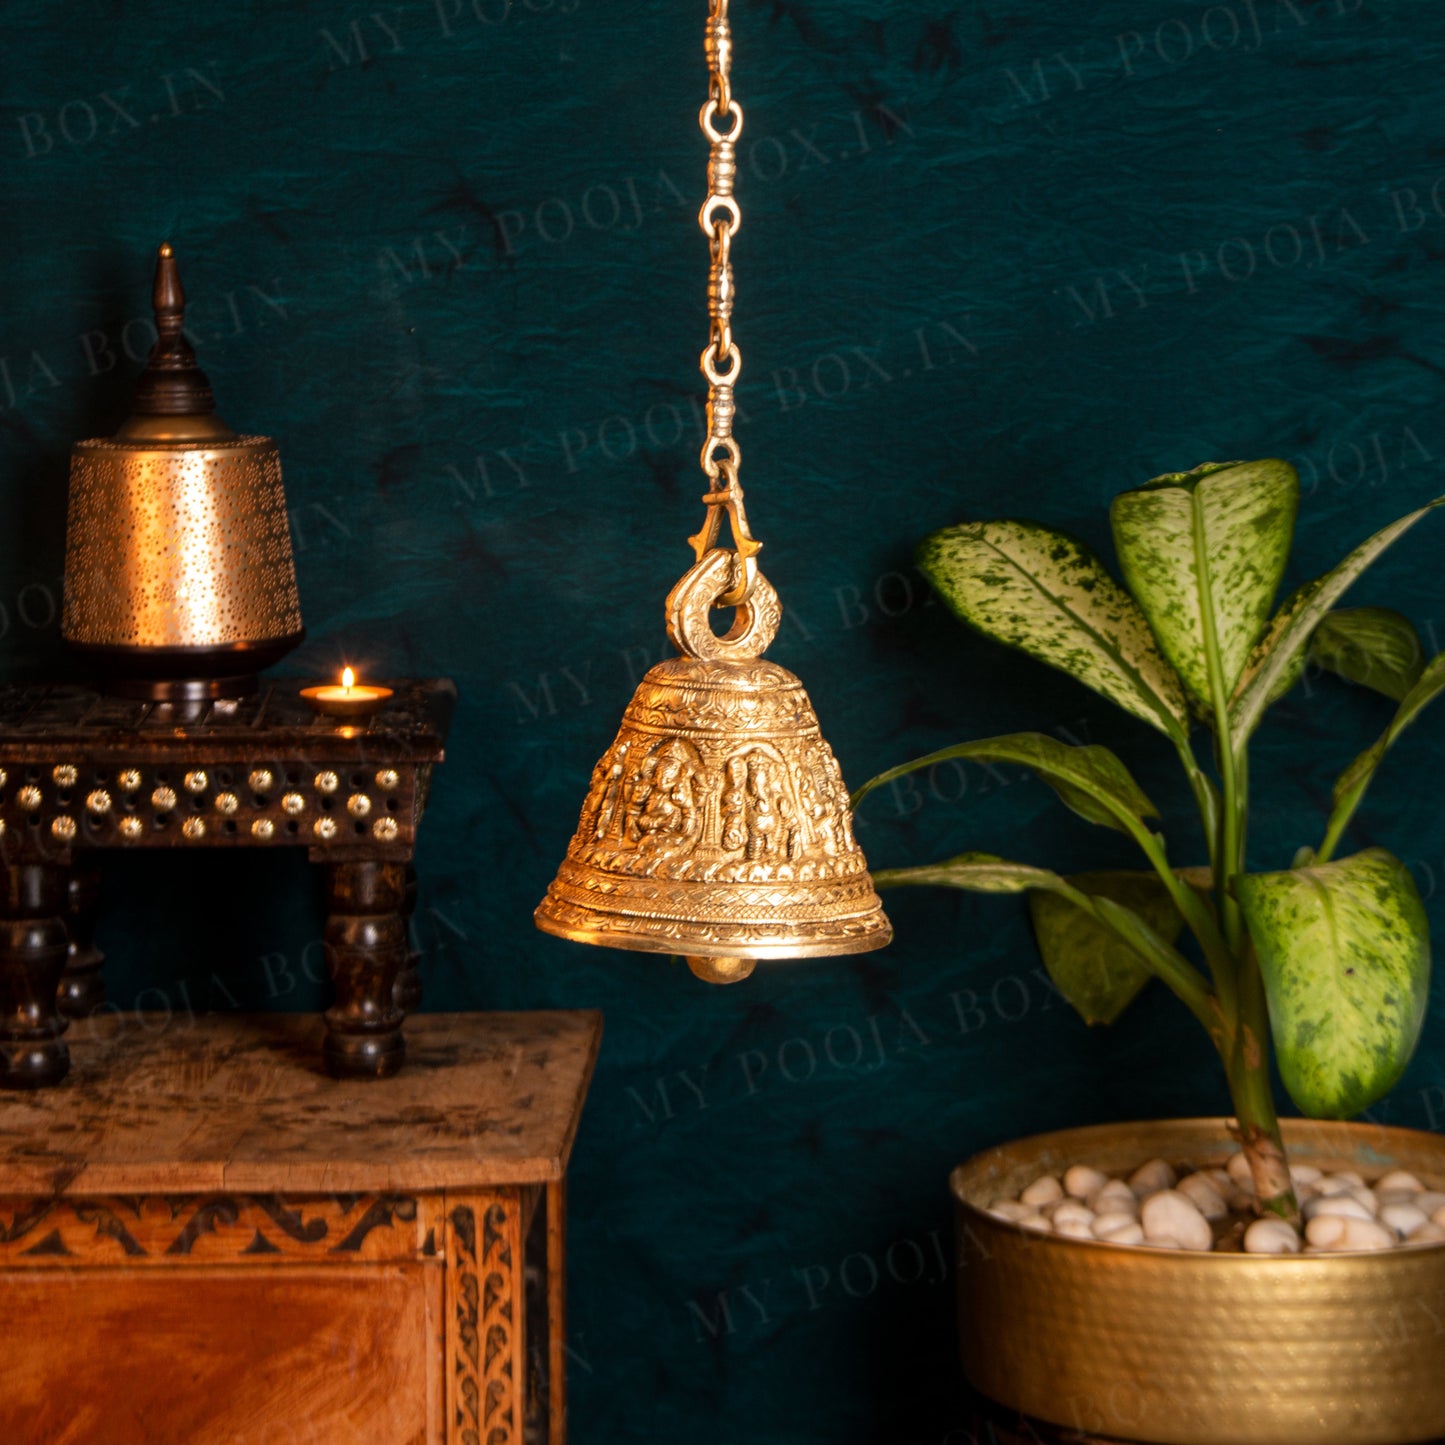 Antique Brass Ganesha Hanging Bell